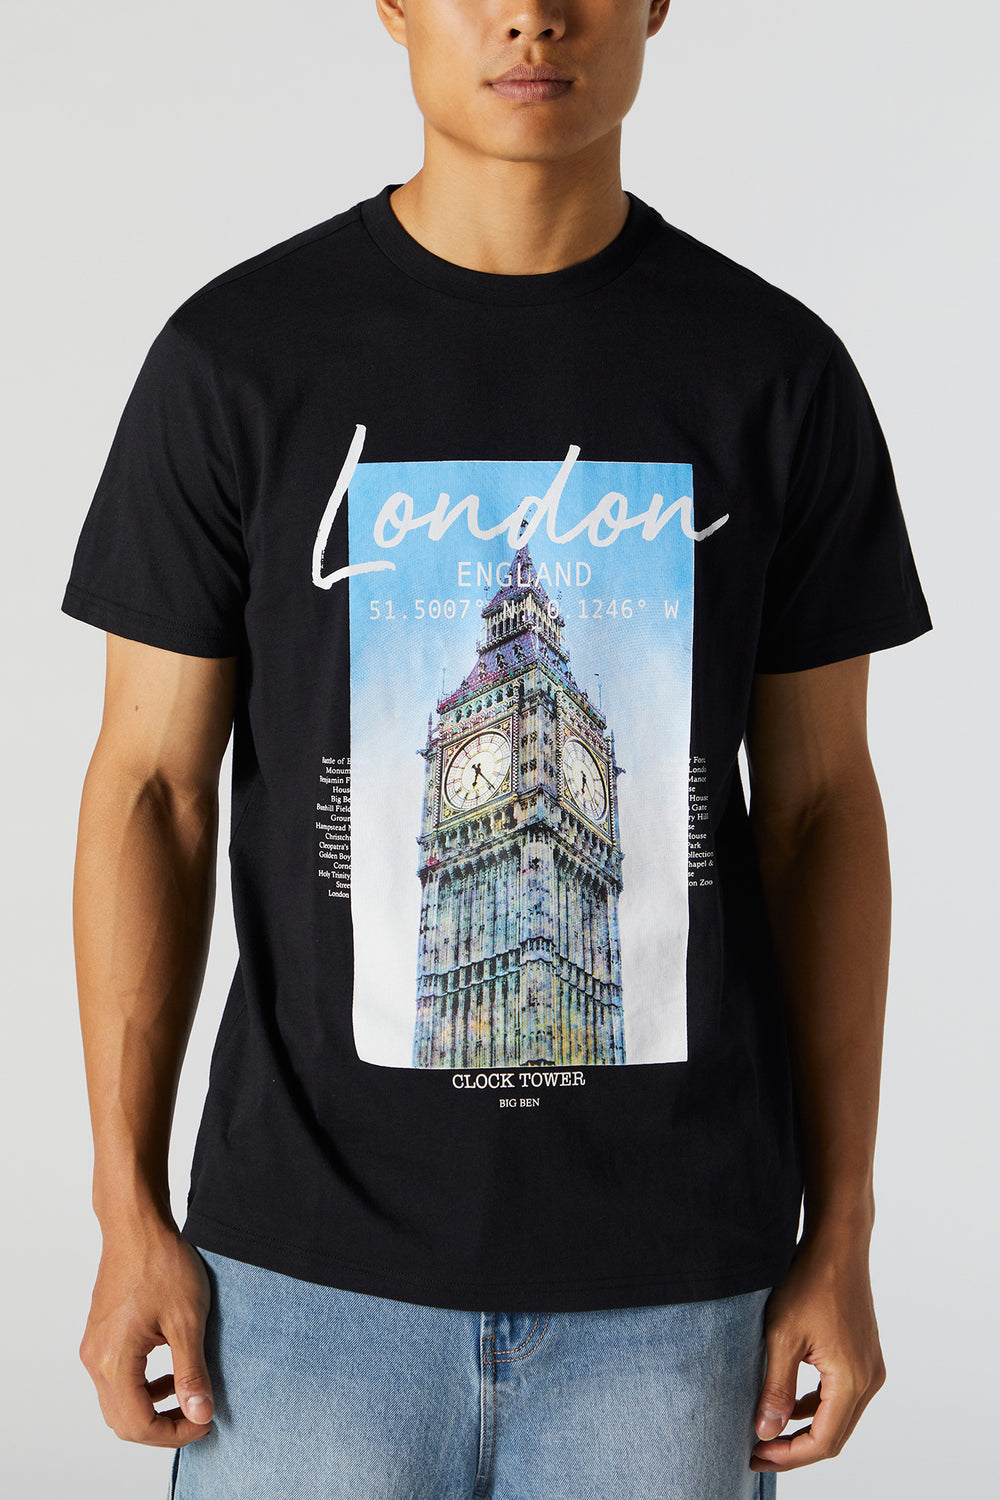 London England Graphic T-Shirt London England Graphic T-Shirt 1